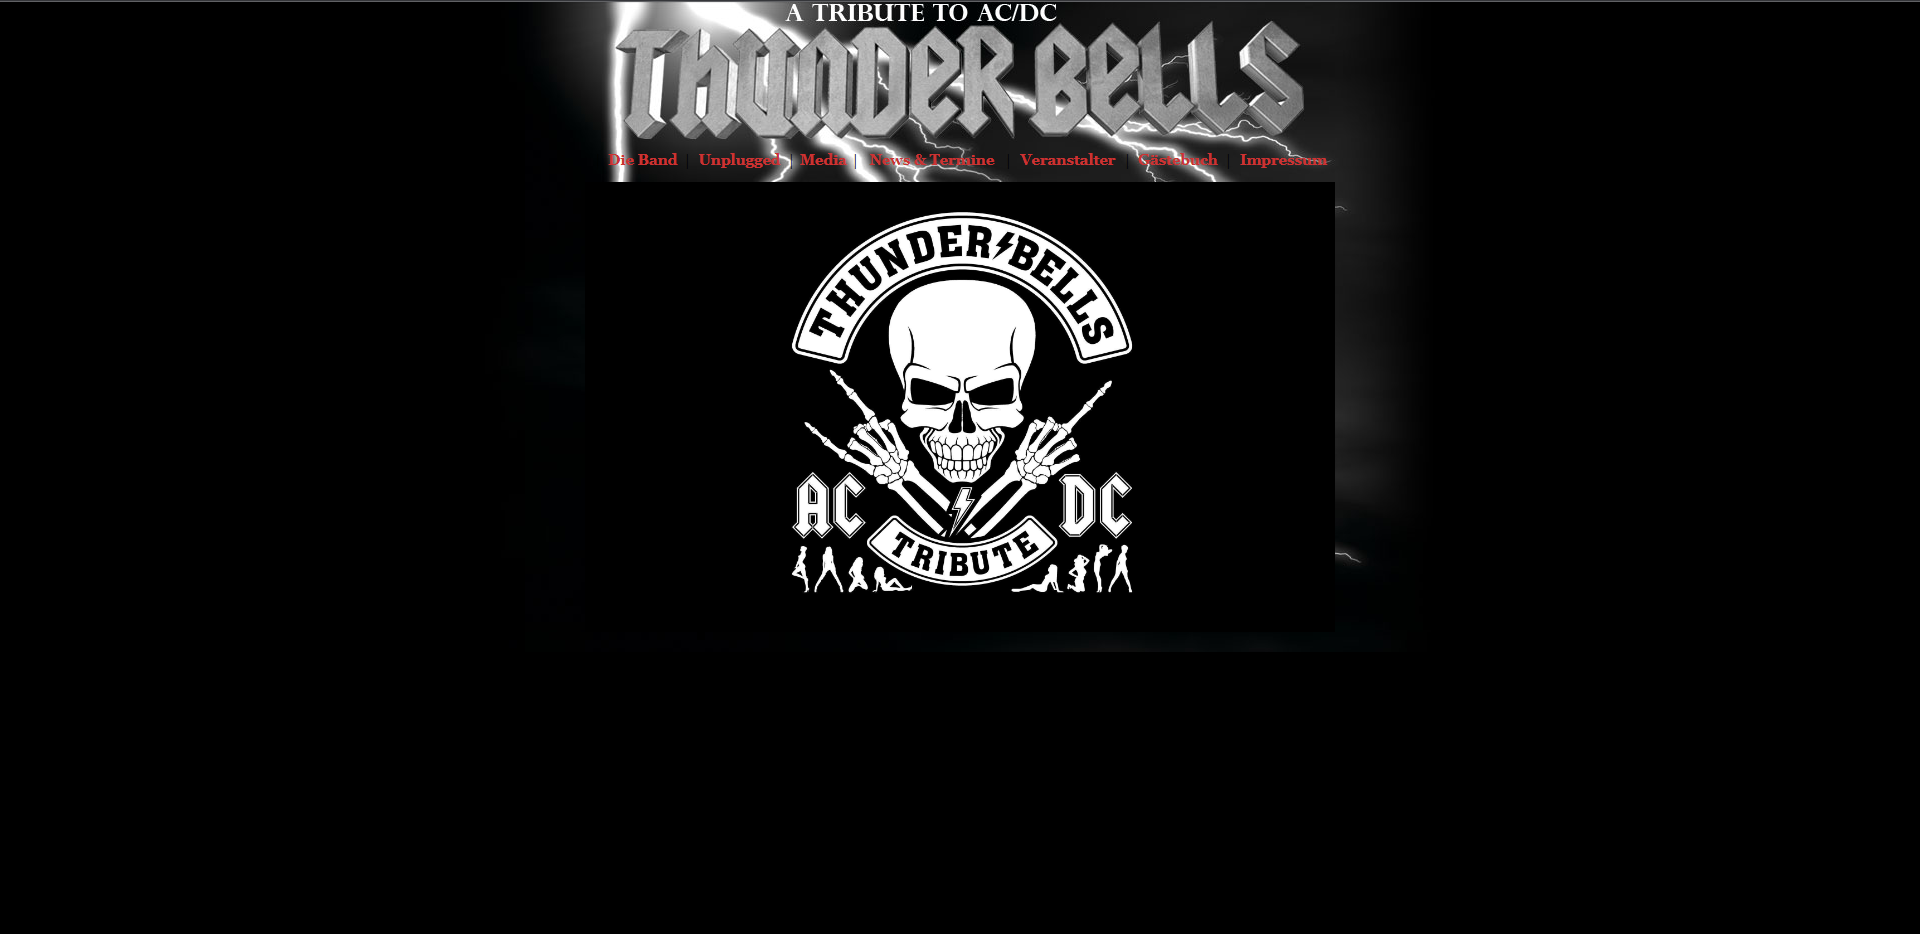 Thunder/Bells – AC/DC Coverband